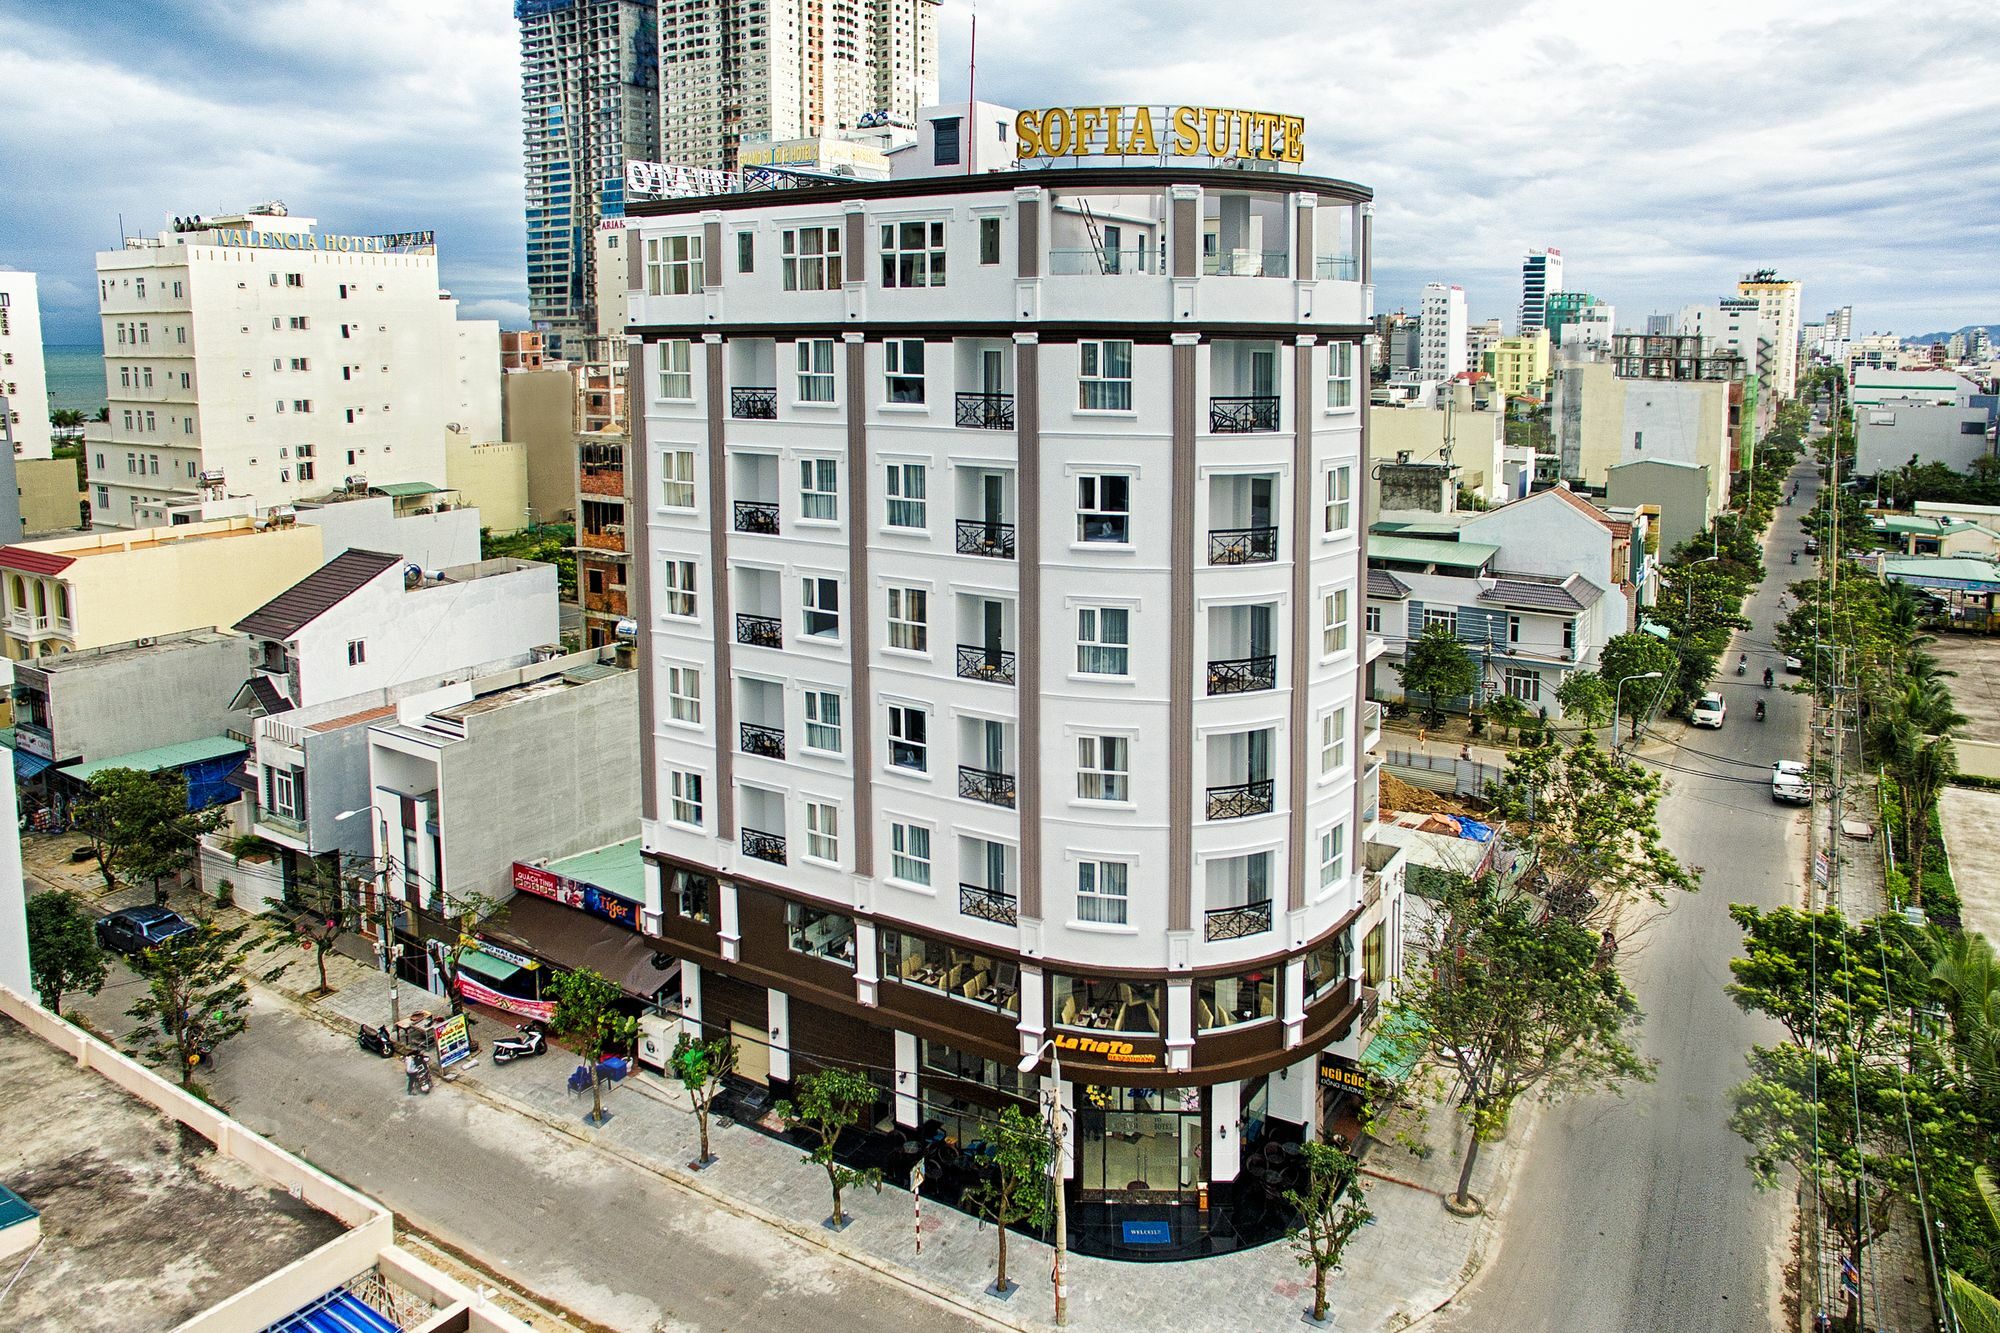 Sofia Suite Hotel Đà Nẵng reviewdanangnet